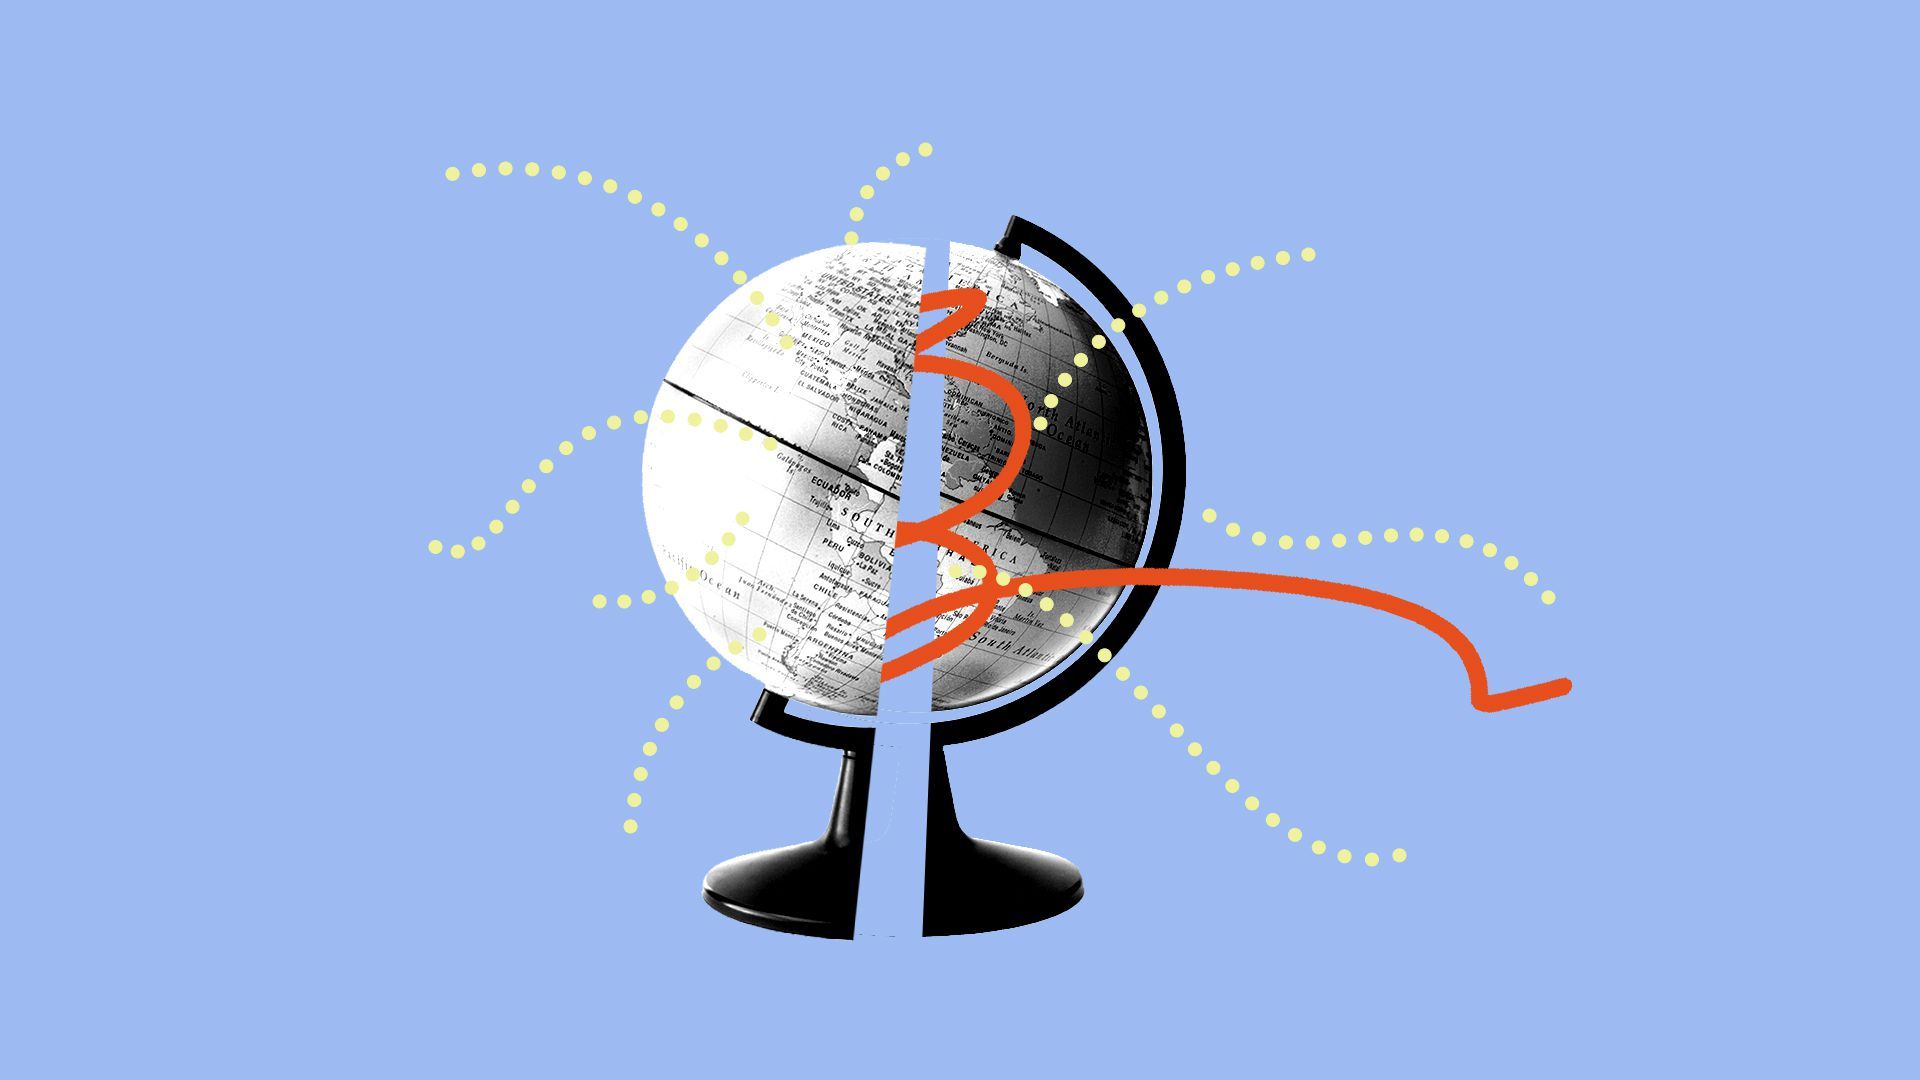 Illustration of a globe